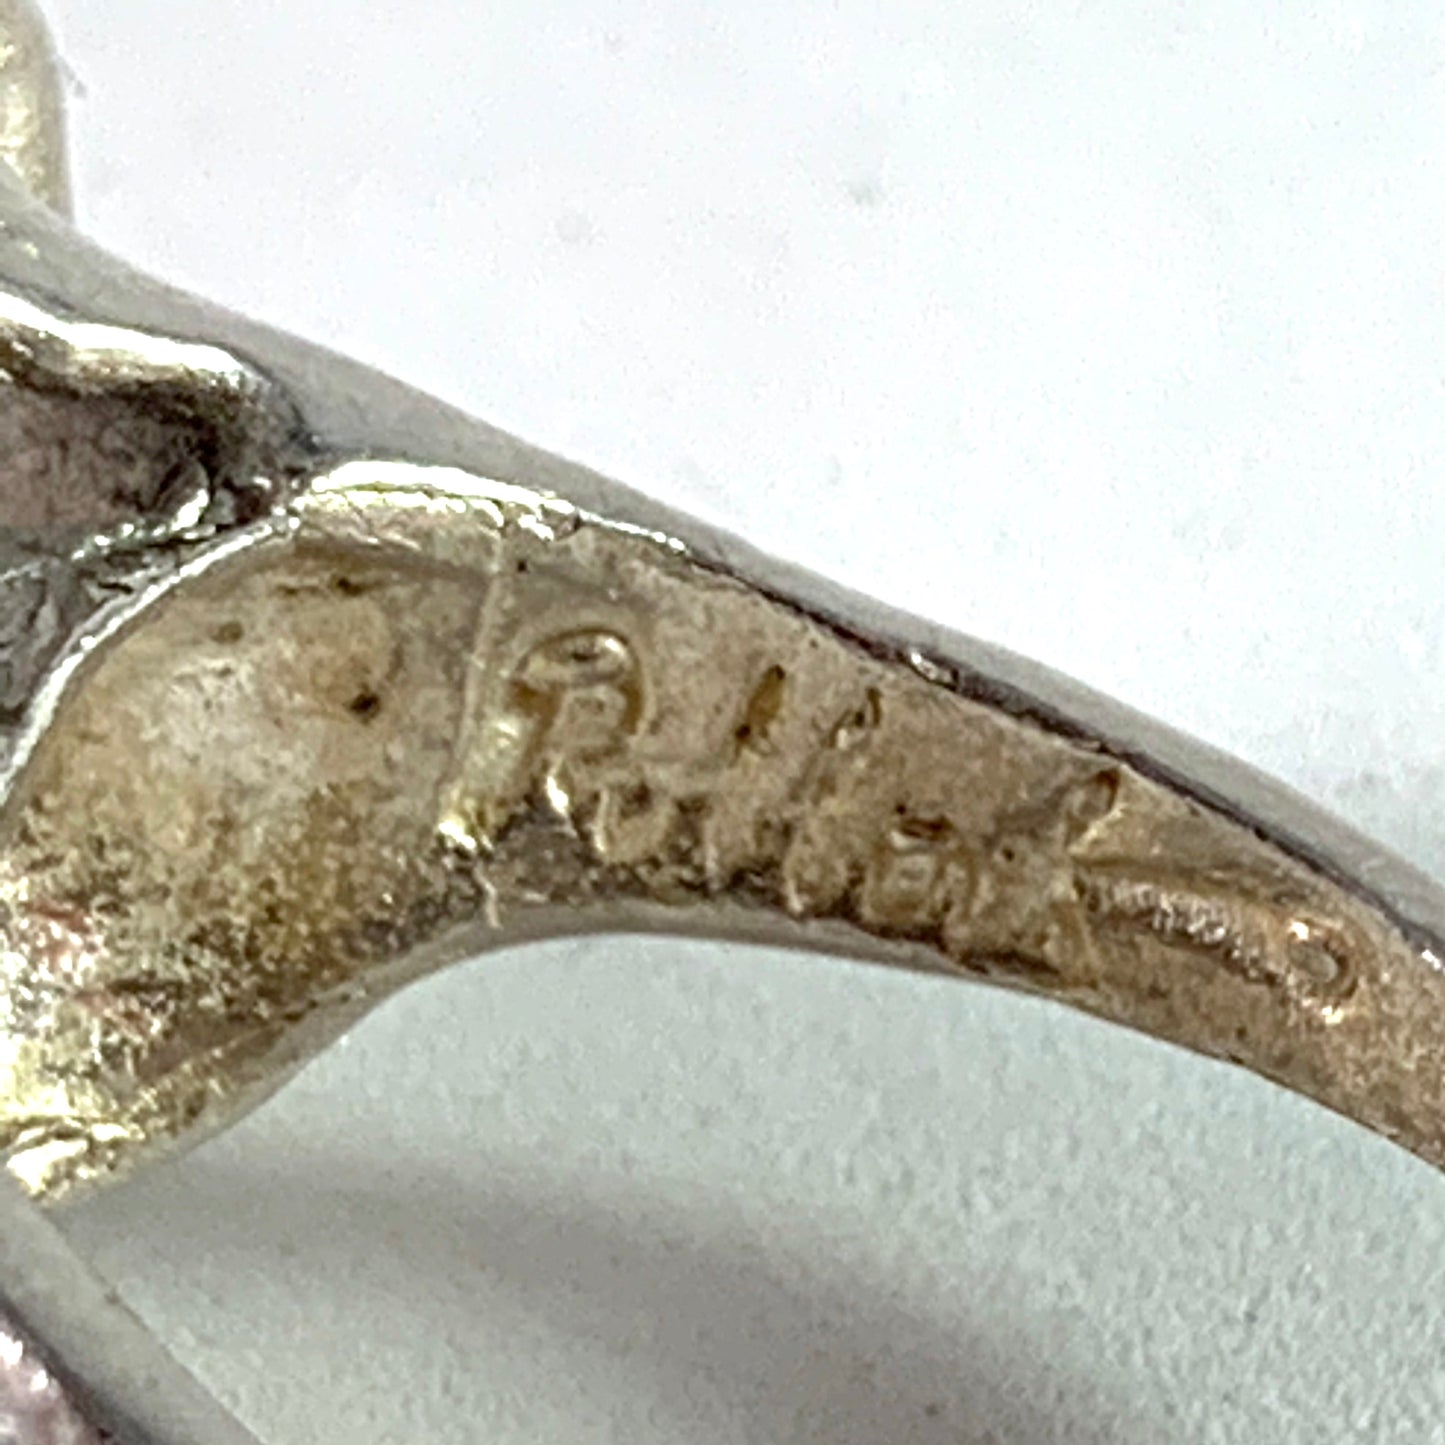 Robbert, Sweden 1970s Vintage Sterling Silver Culture Pearl Ring. Signed.